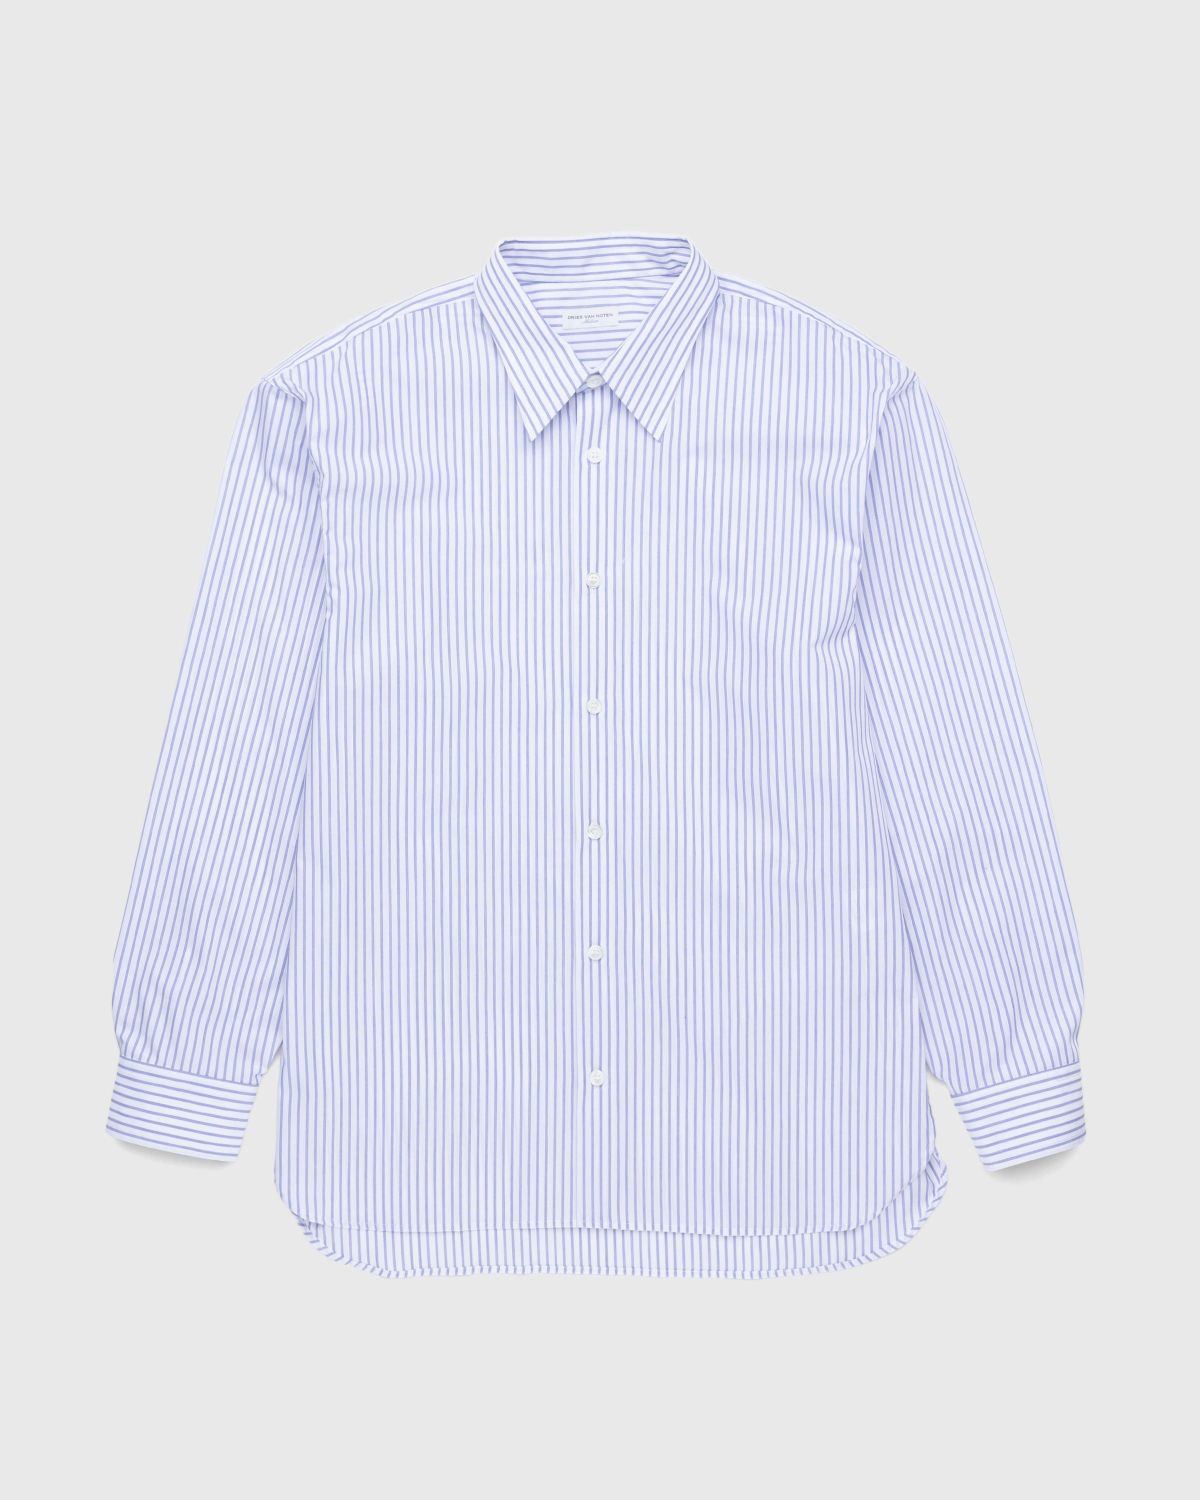 Dries van Noten – Croom Shirt Striped White - Longsleeve Shirts - White - Image 1